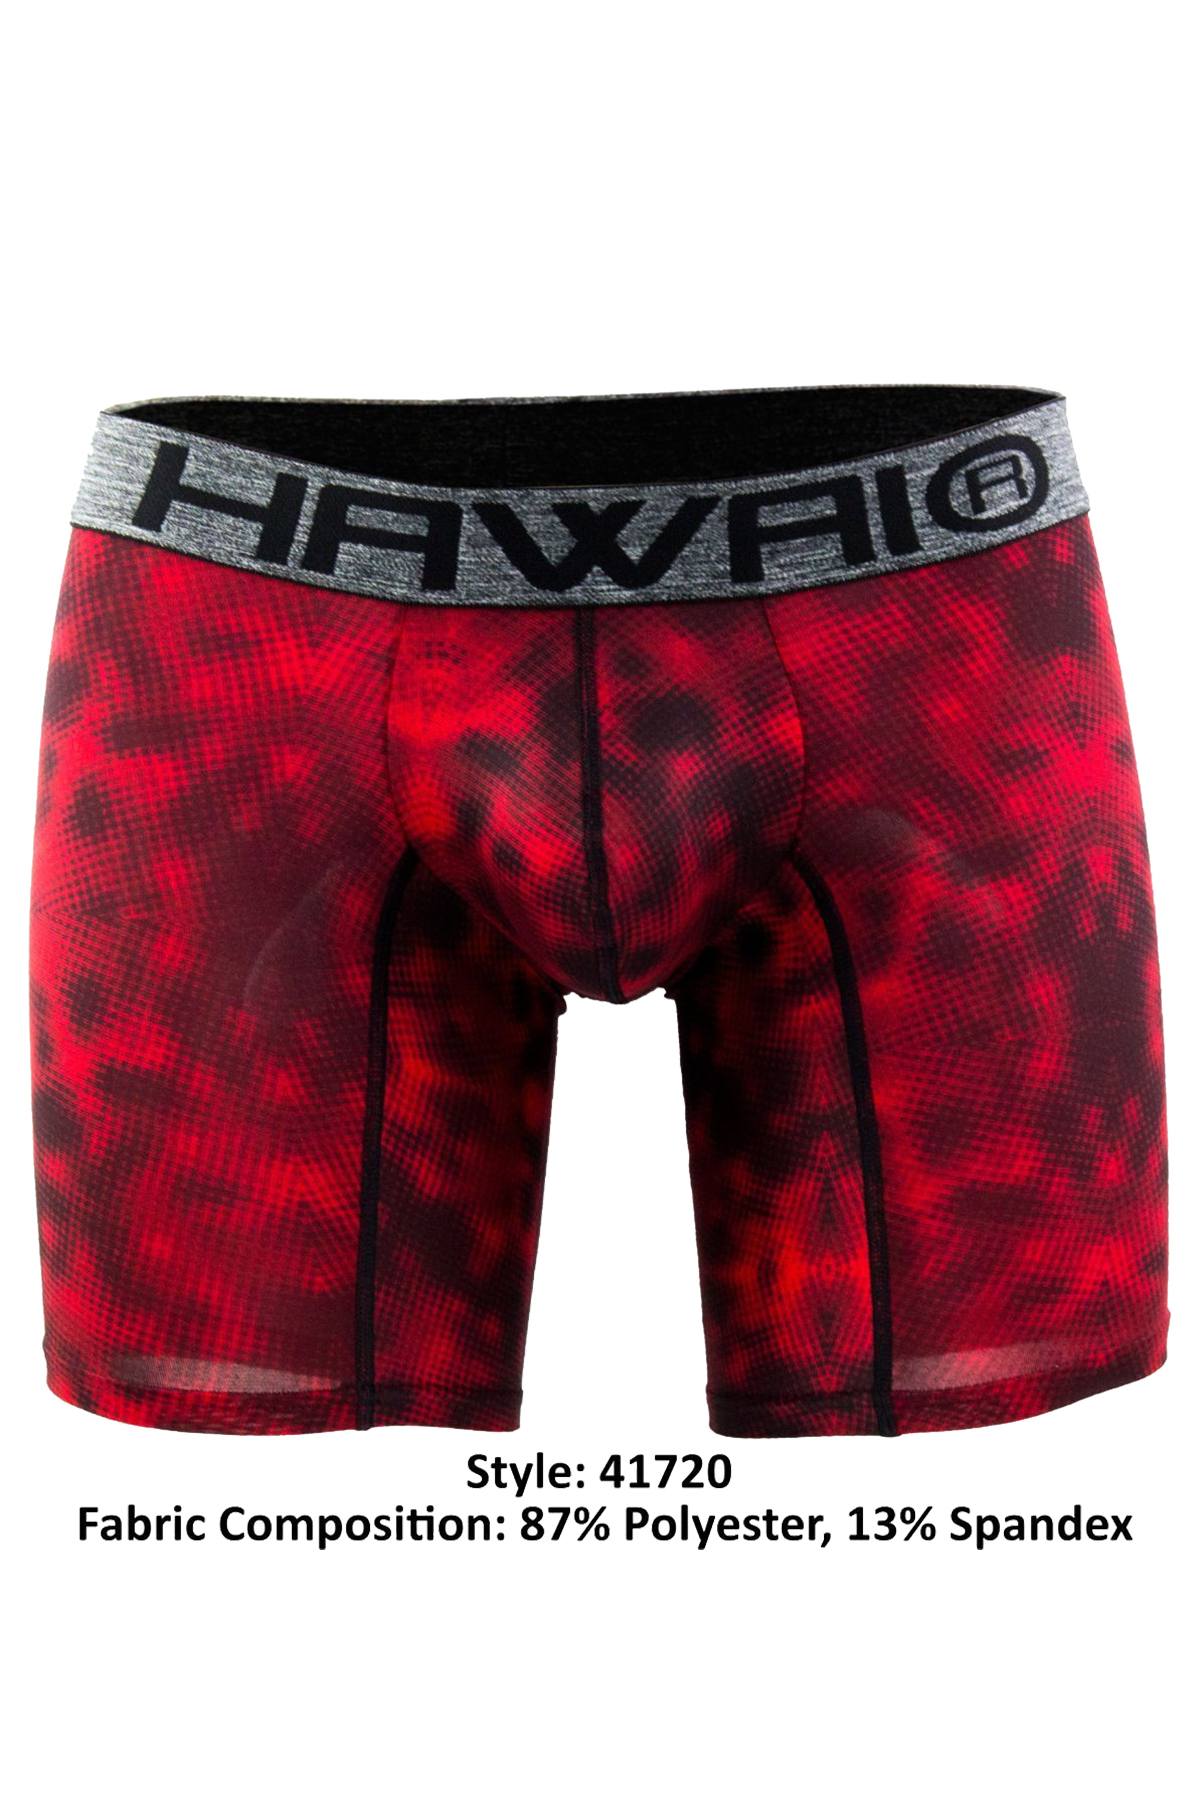 Hawai Red Burn Blur Boxer Brief